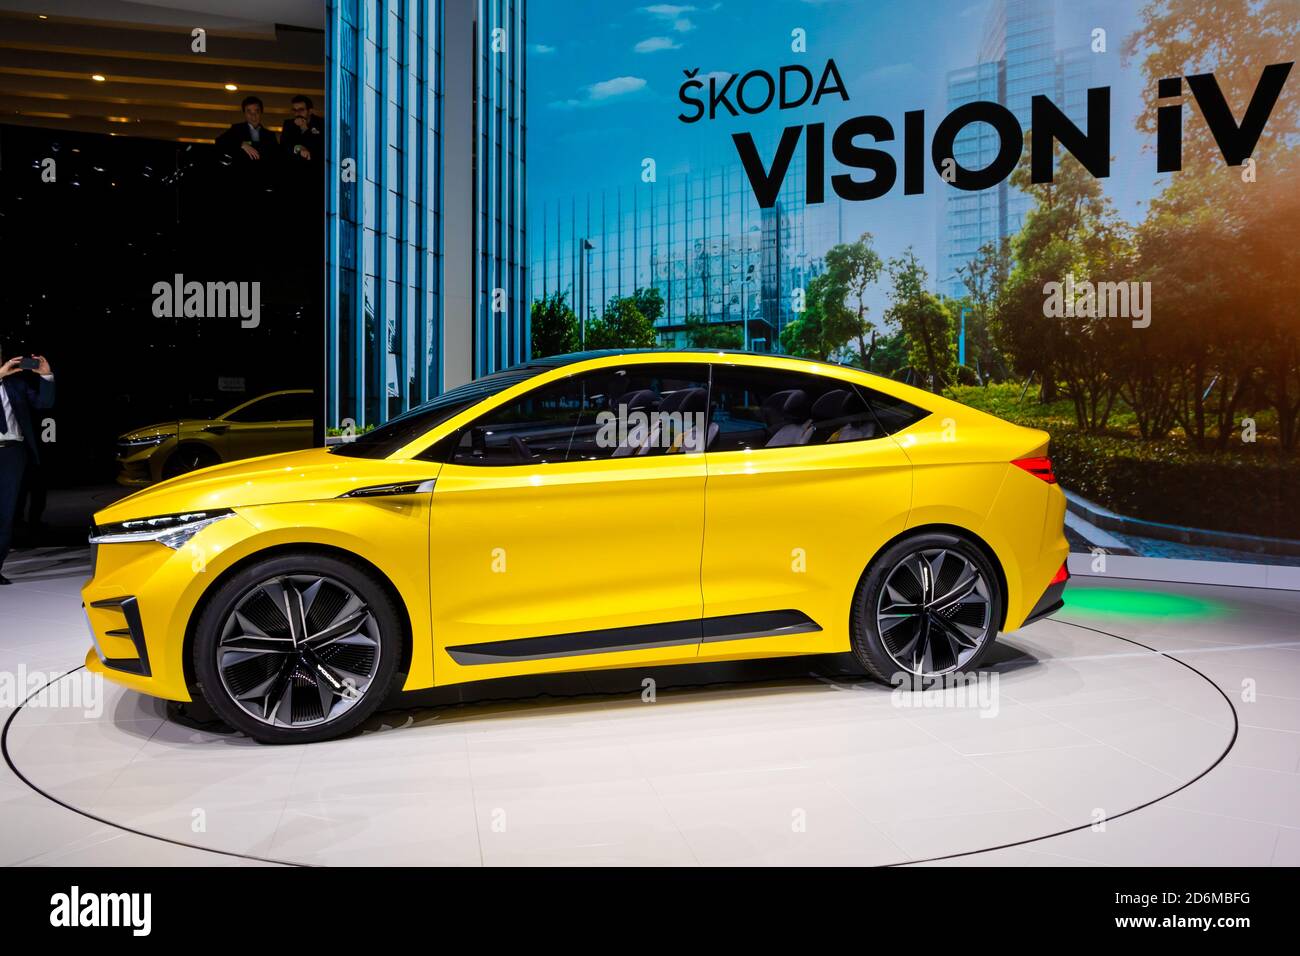 Skoda Vision iV concept car at the 89th Geneva International Motor Show. Geneva, Switzerland - March 5, 2019. Stock Photo